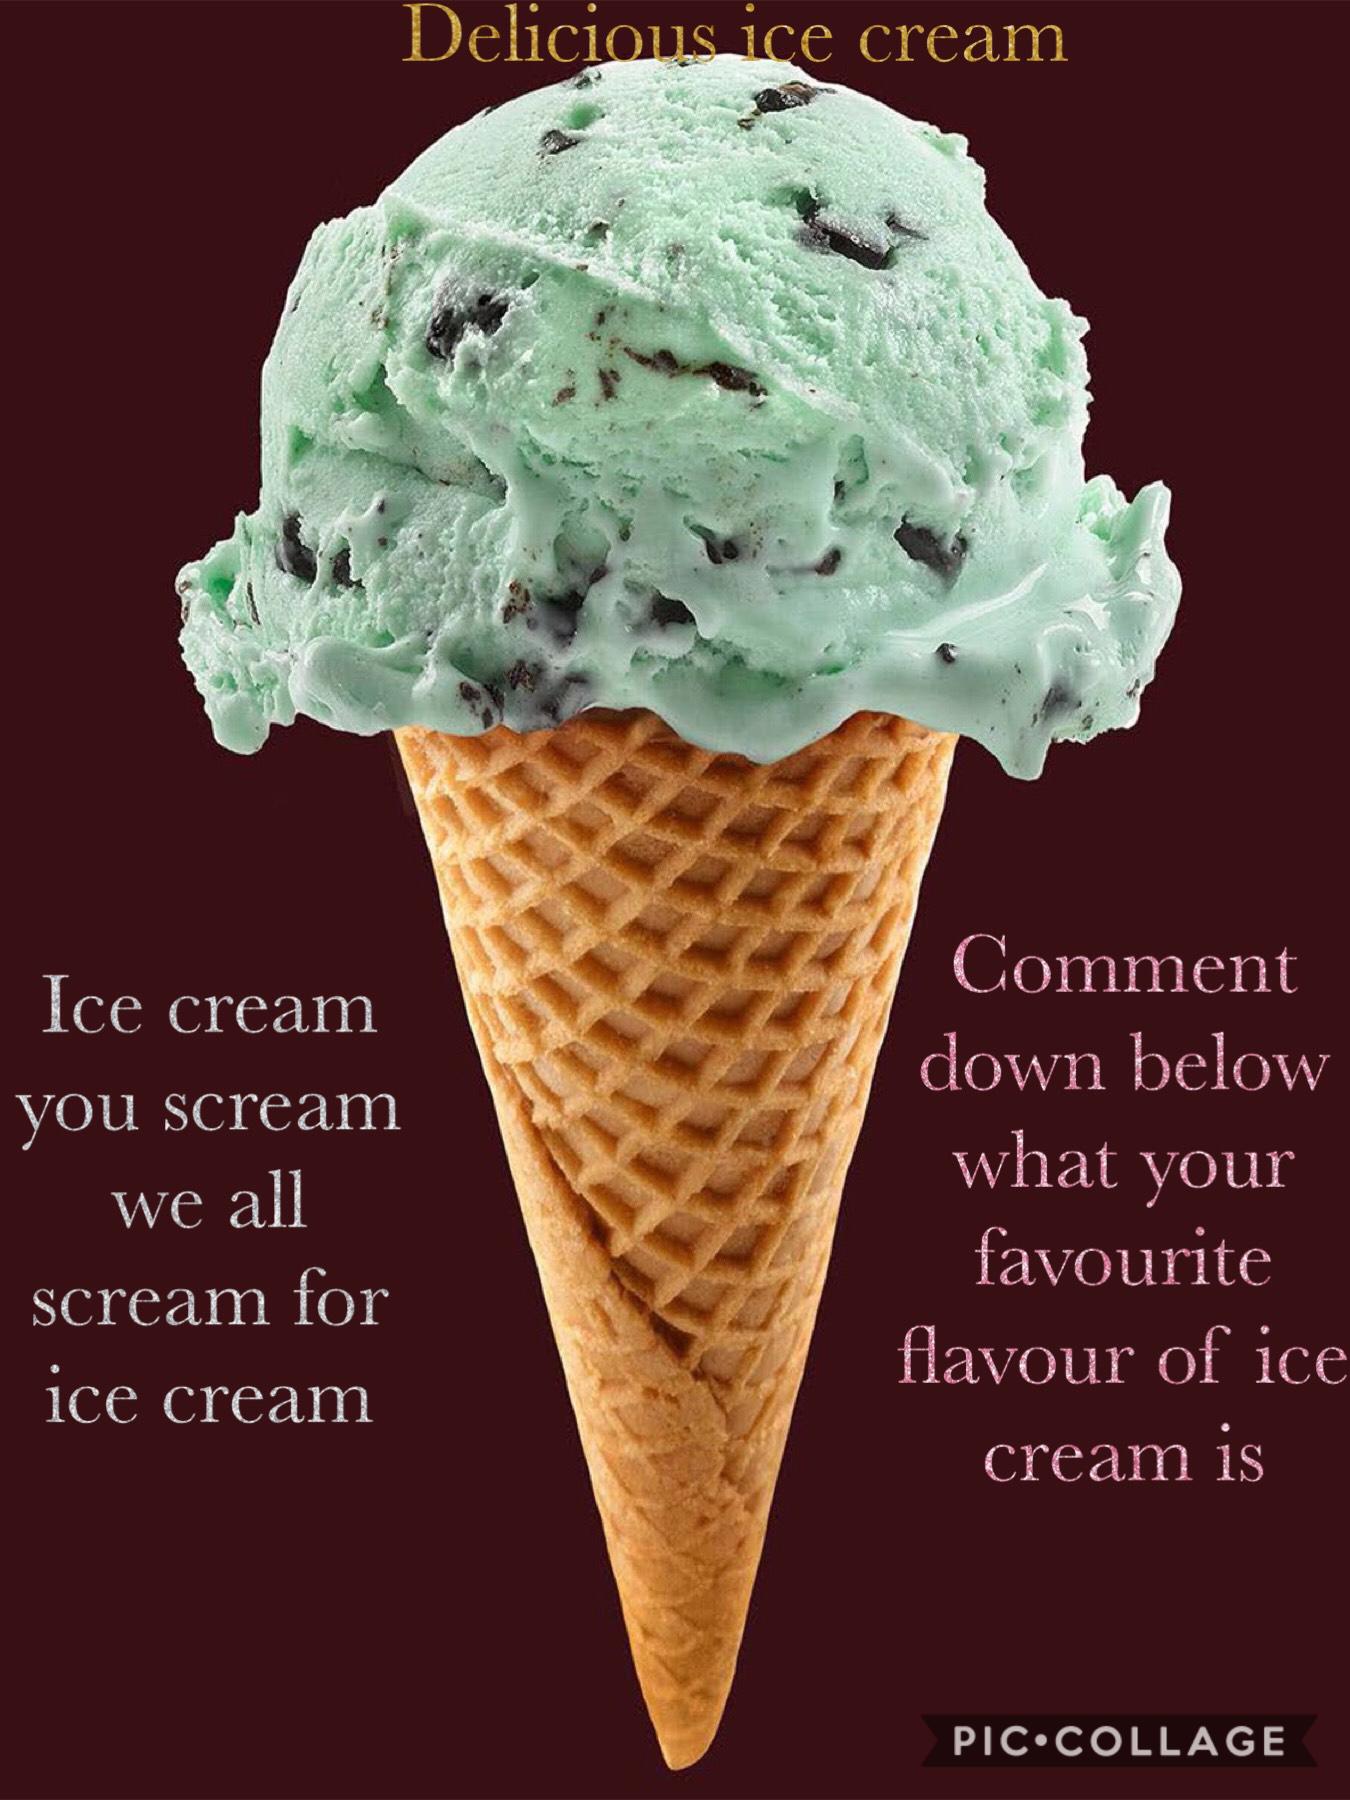 Delicious ice cream 